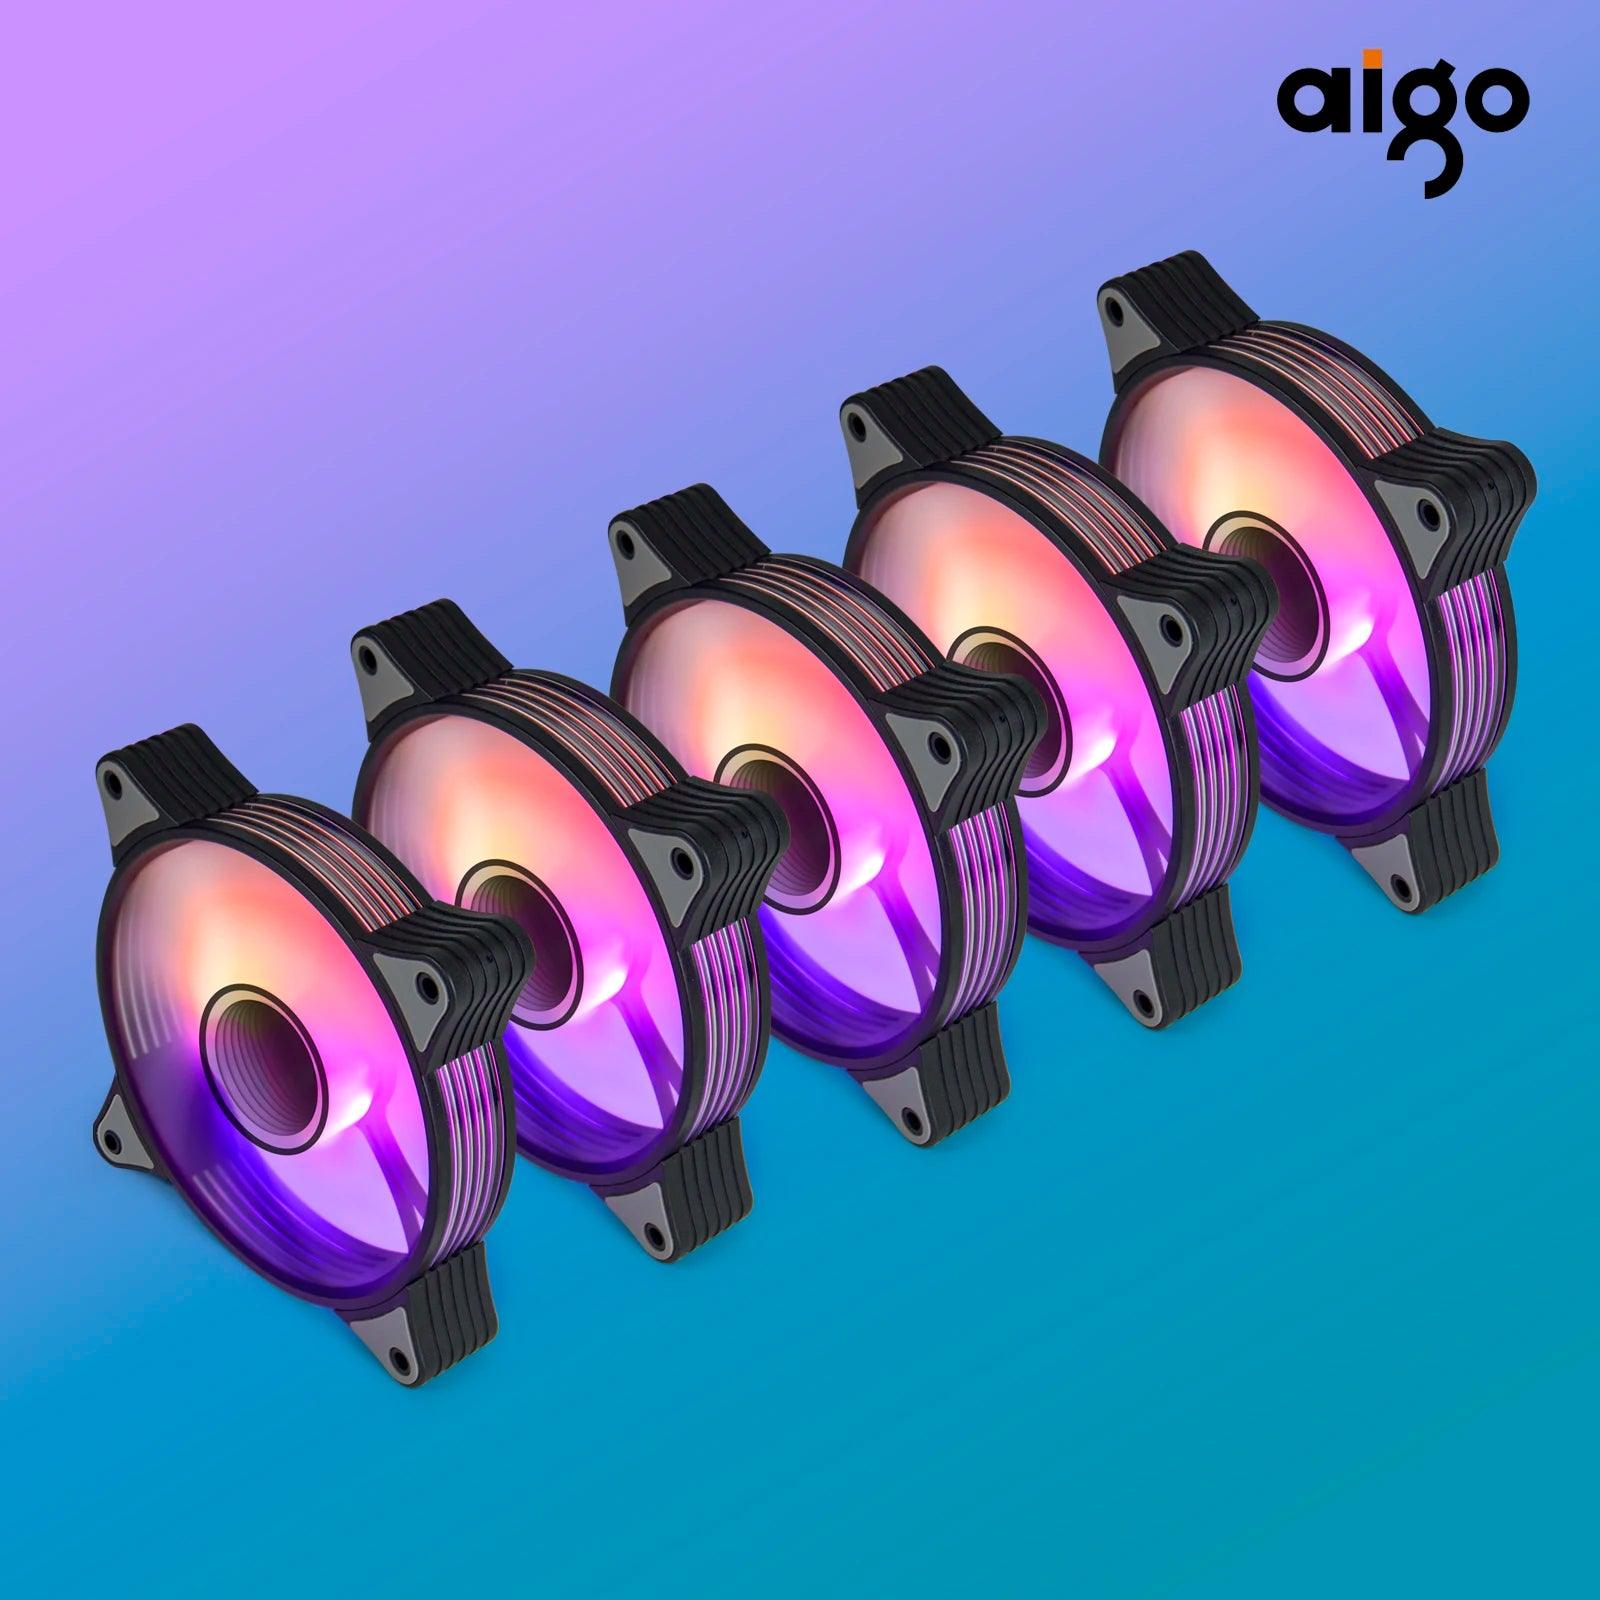 Aigo AR12PRO 120mm RGB Computer Case Fan with High Airflow and Long Lifespan  ourlum.com   